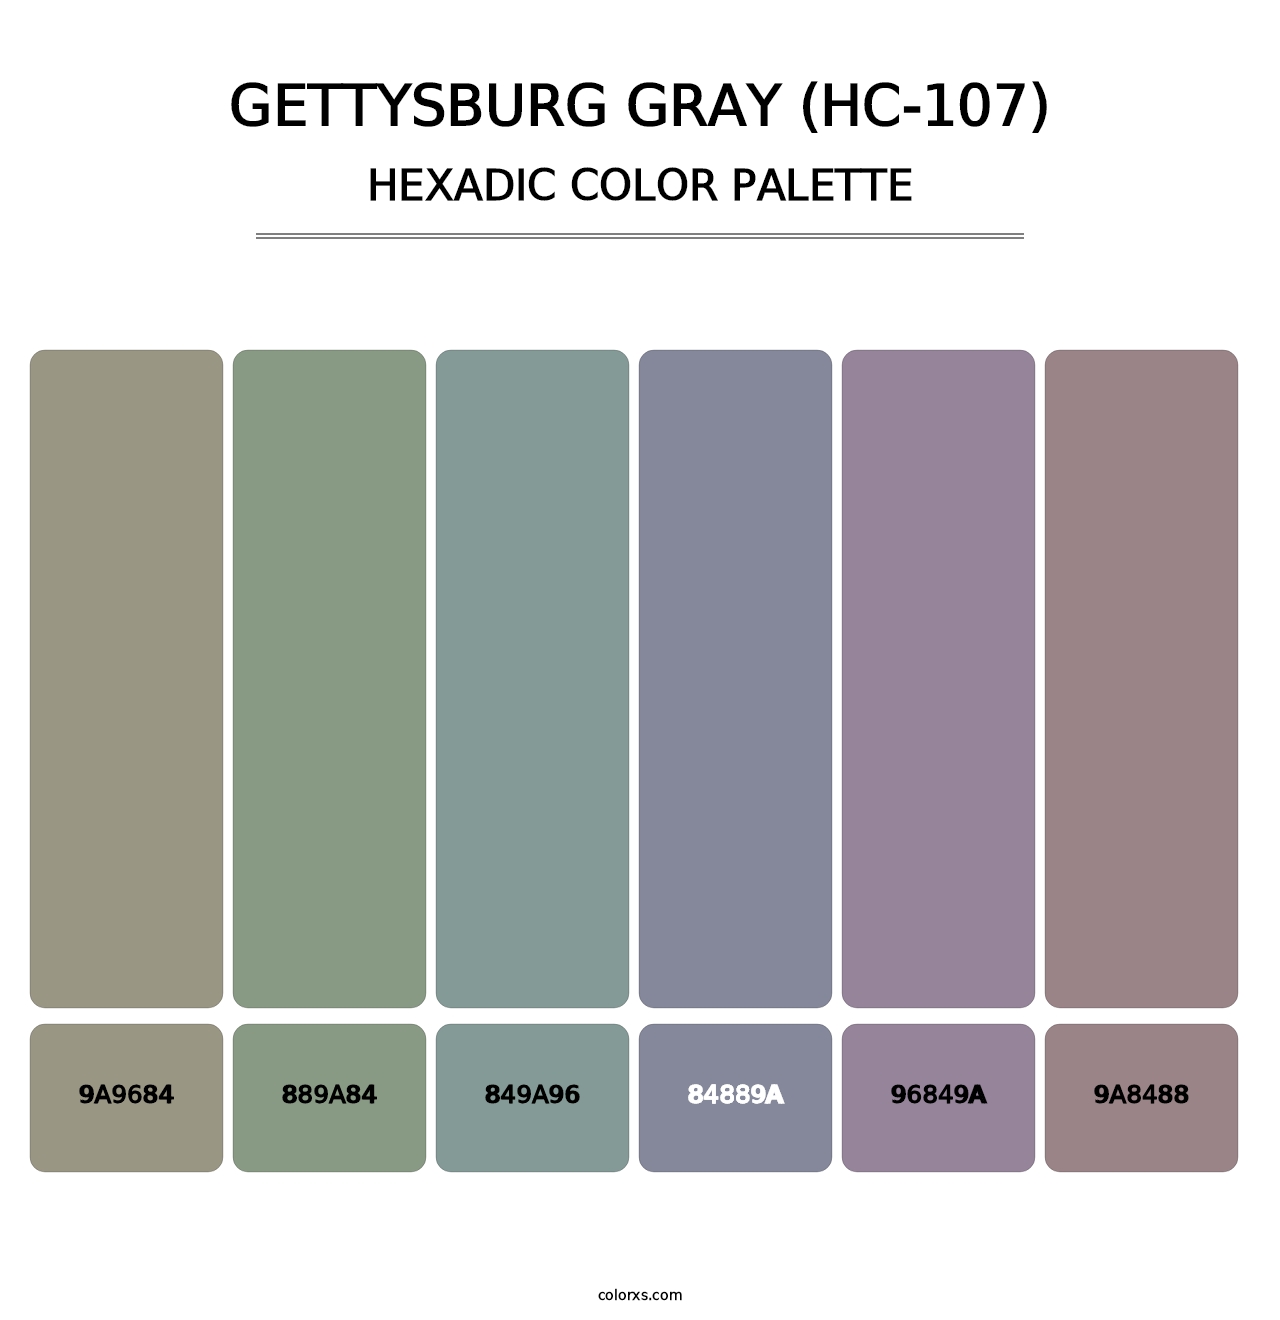 Gettysburg Gray (HC-107) - Hexadic Color Palette